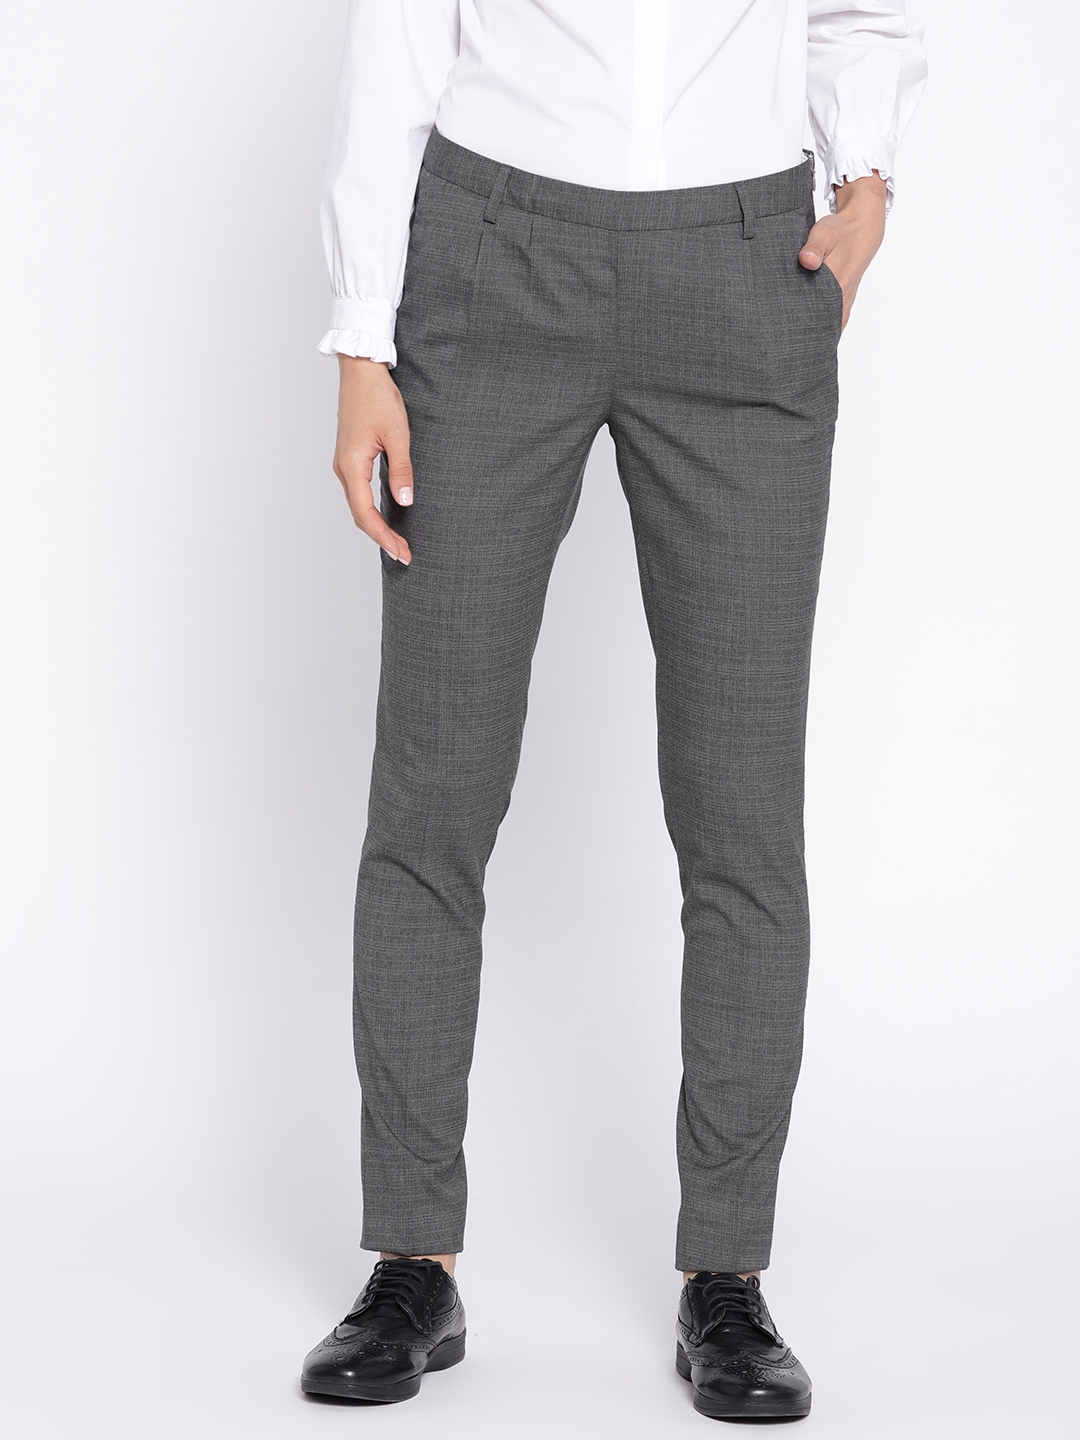 grey slim trousers womens